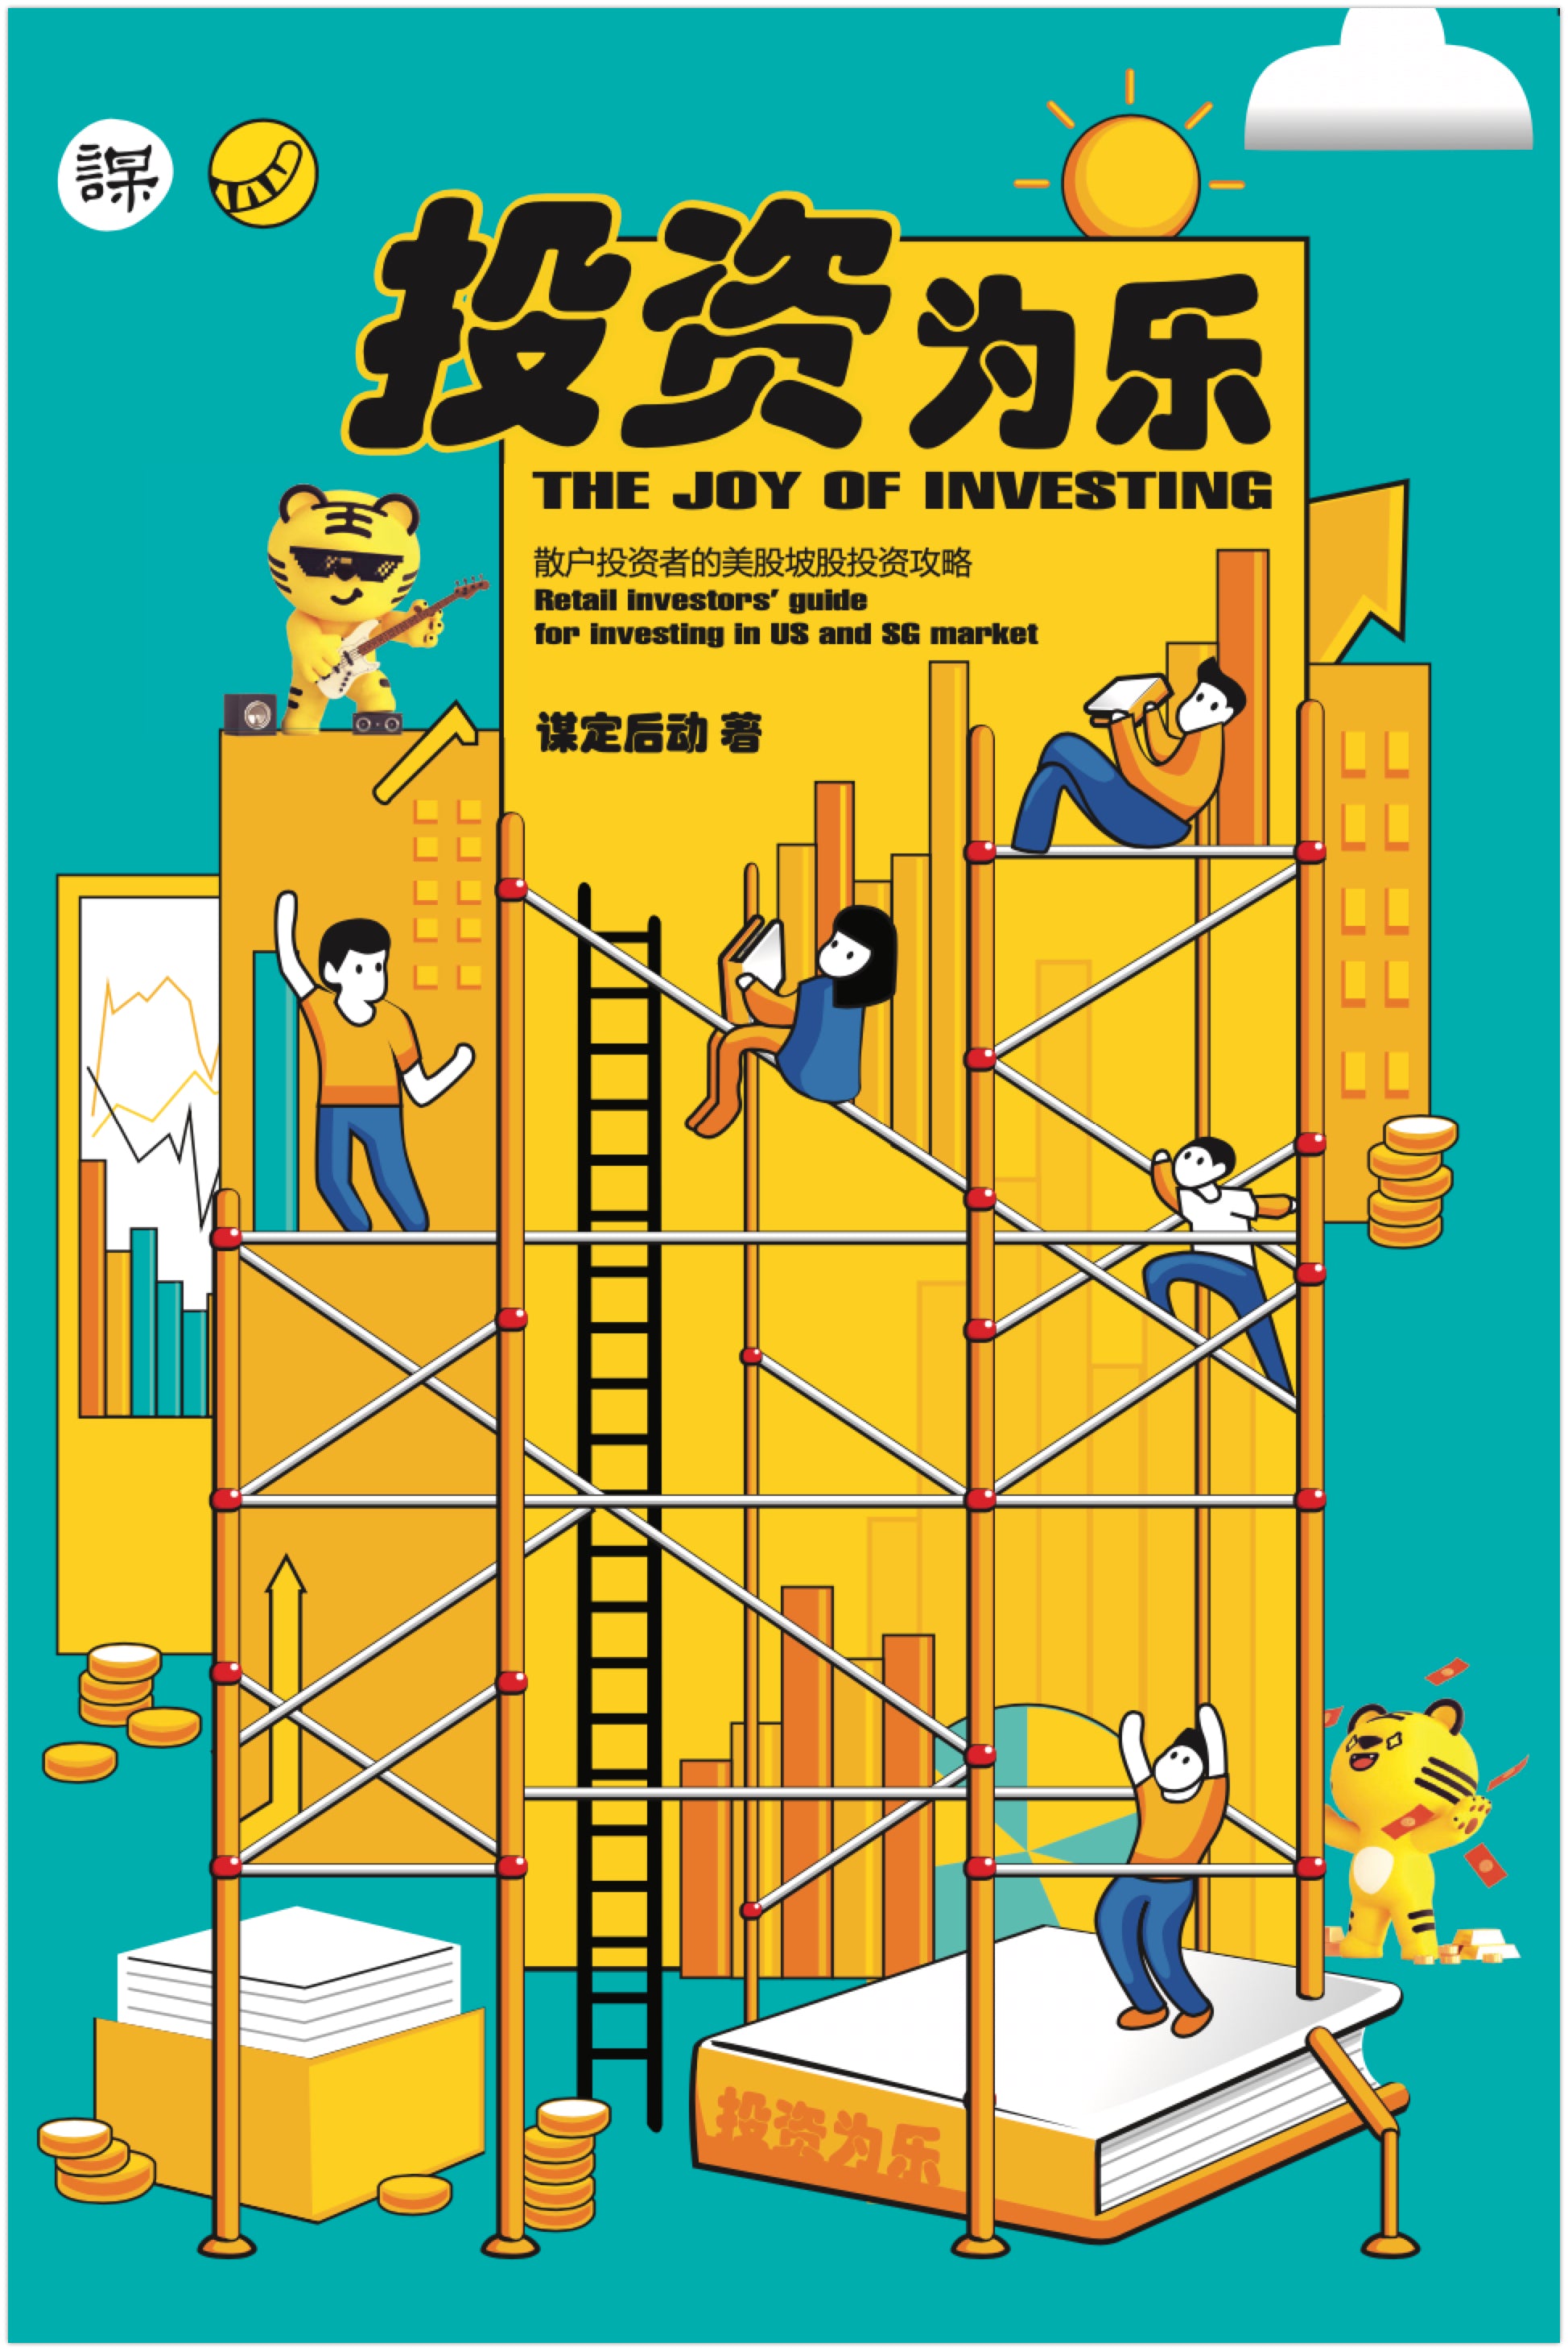 投资为乐 (The Joy of Investing)